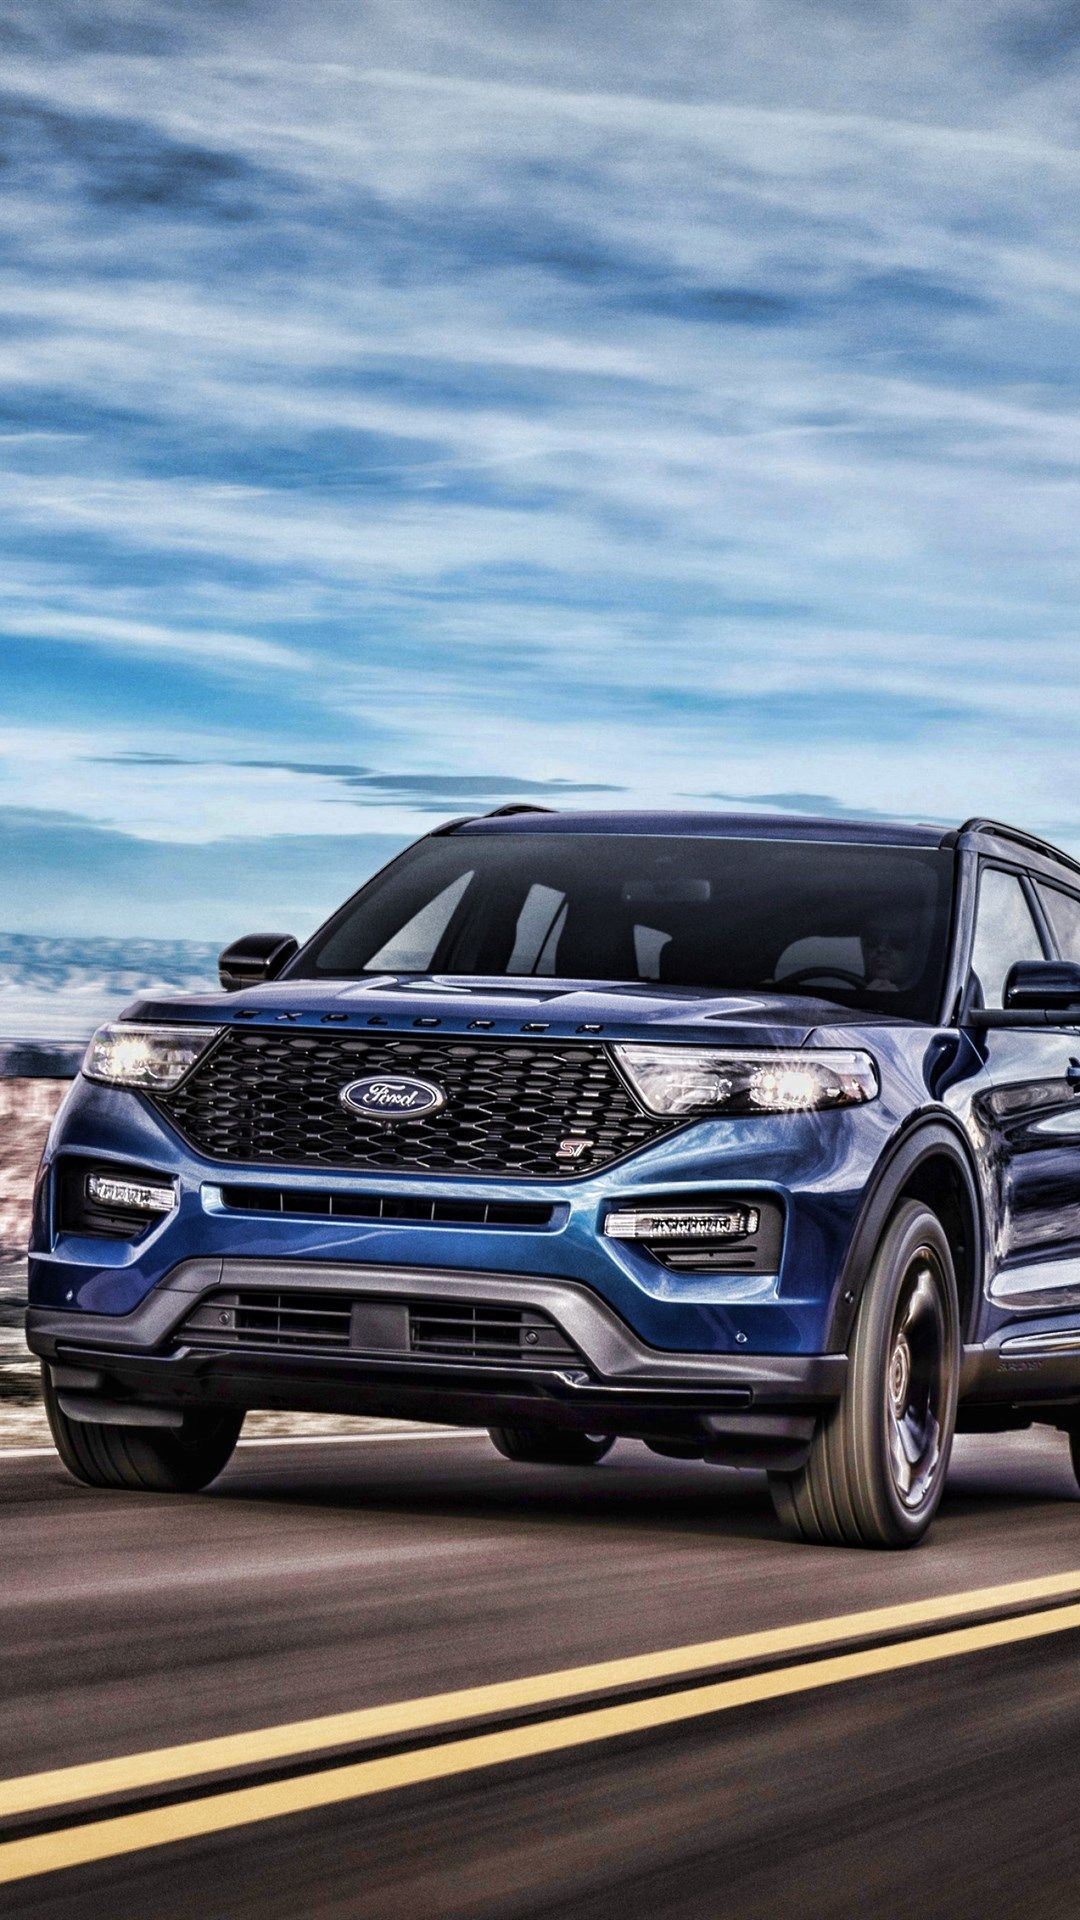 Ford Explorer, 2019 model, Motion blur, Captivating wallpapers, 1080x1920 Full HD Handy